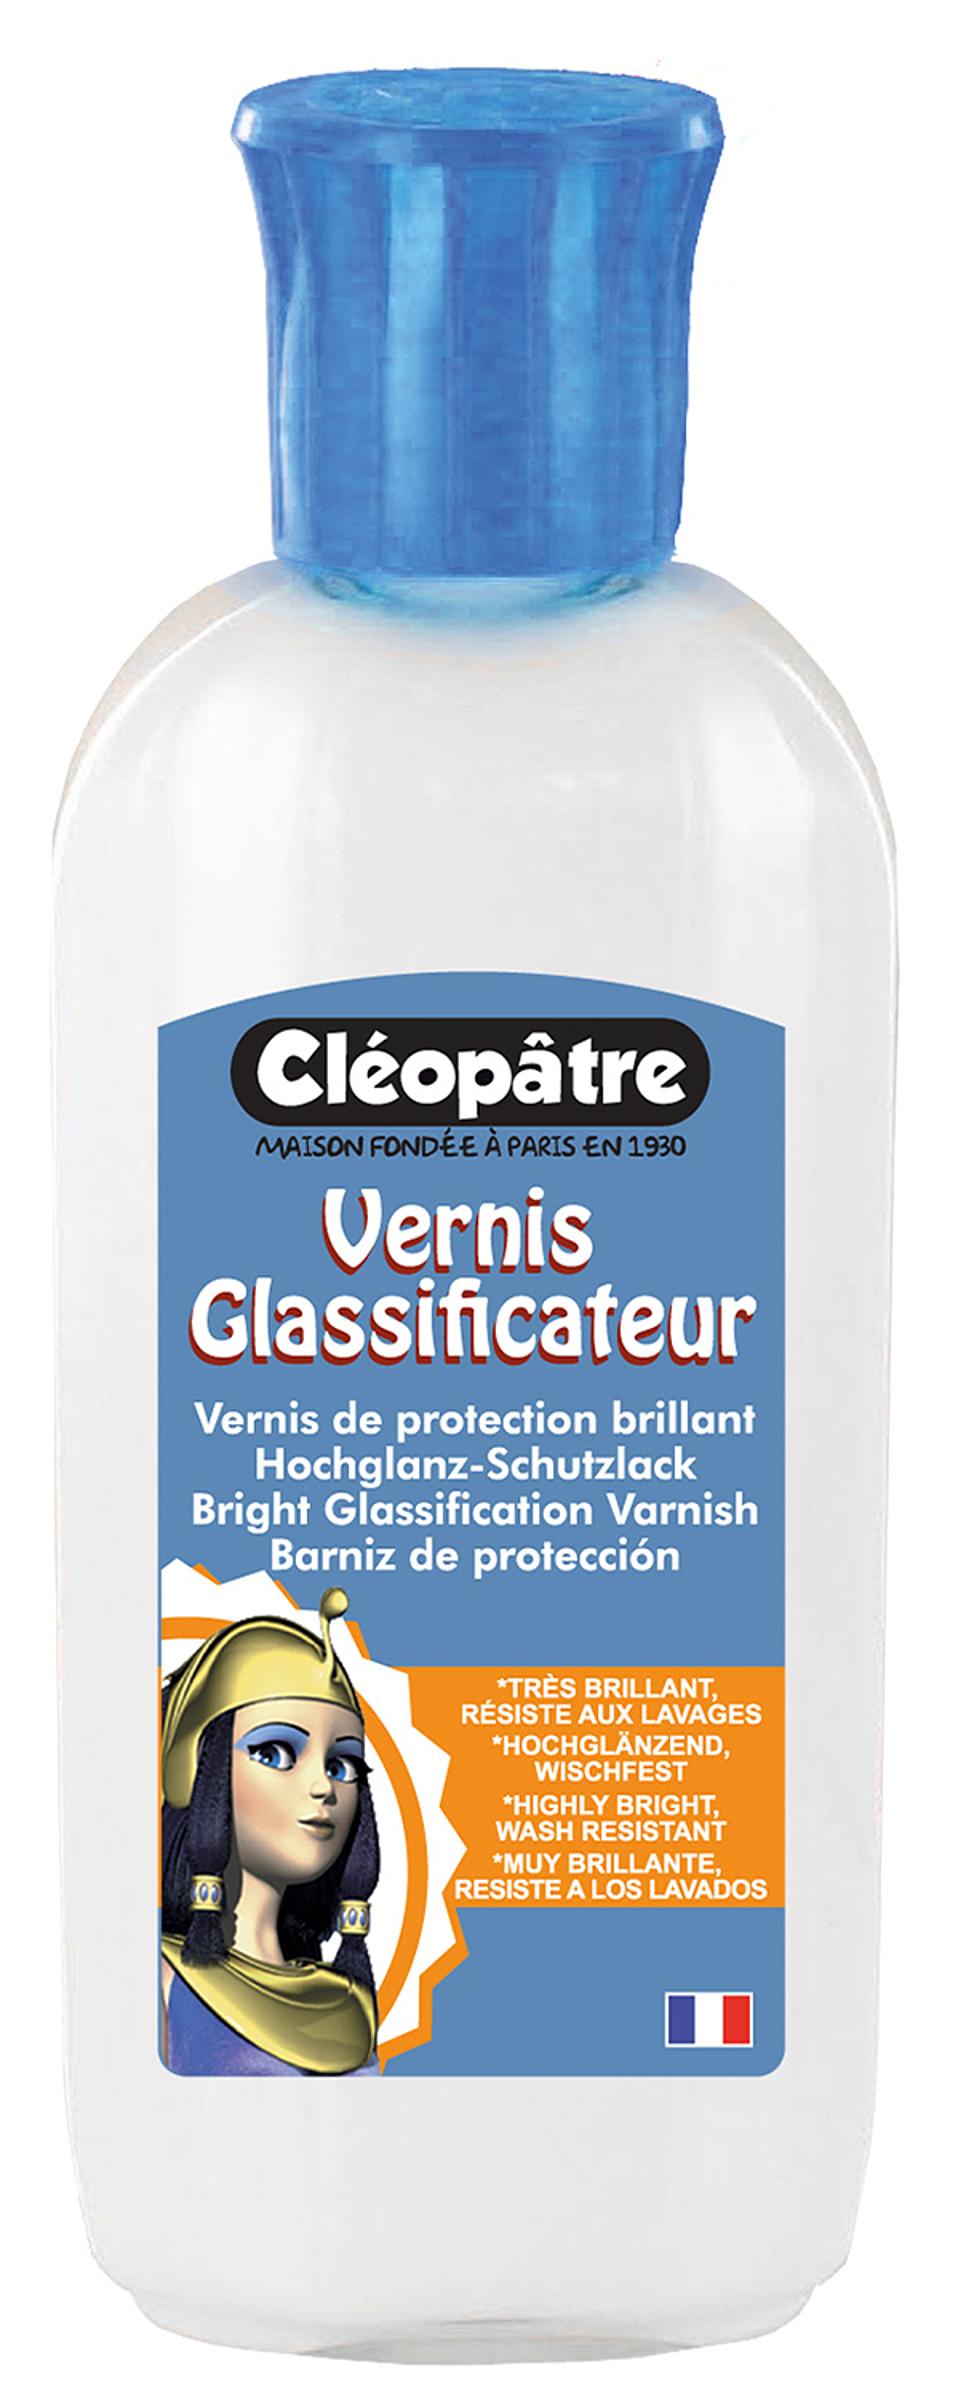 Cléopâtre Vernis Glassificateur, boesner Suisse